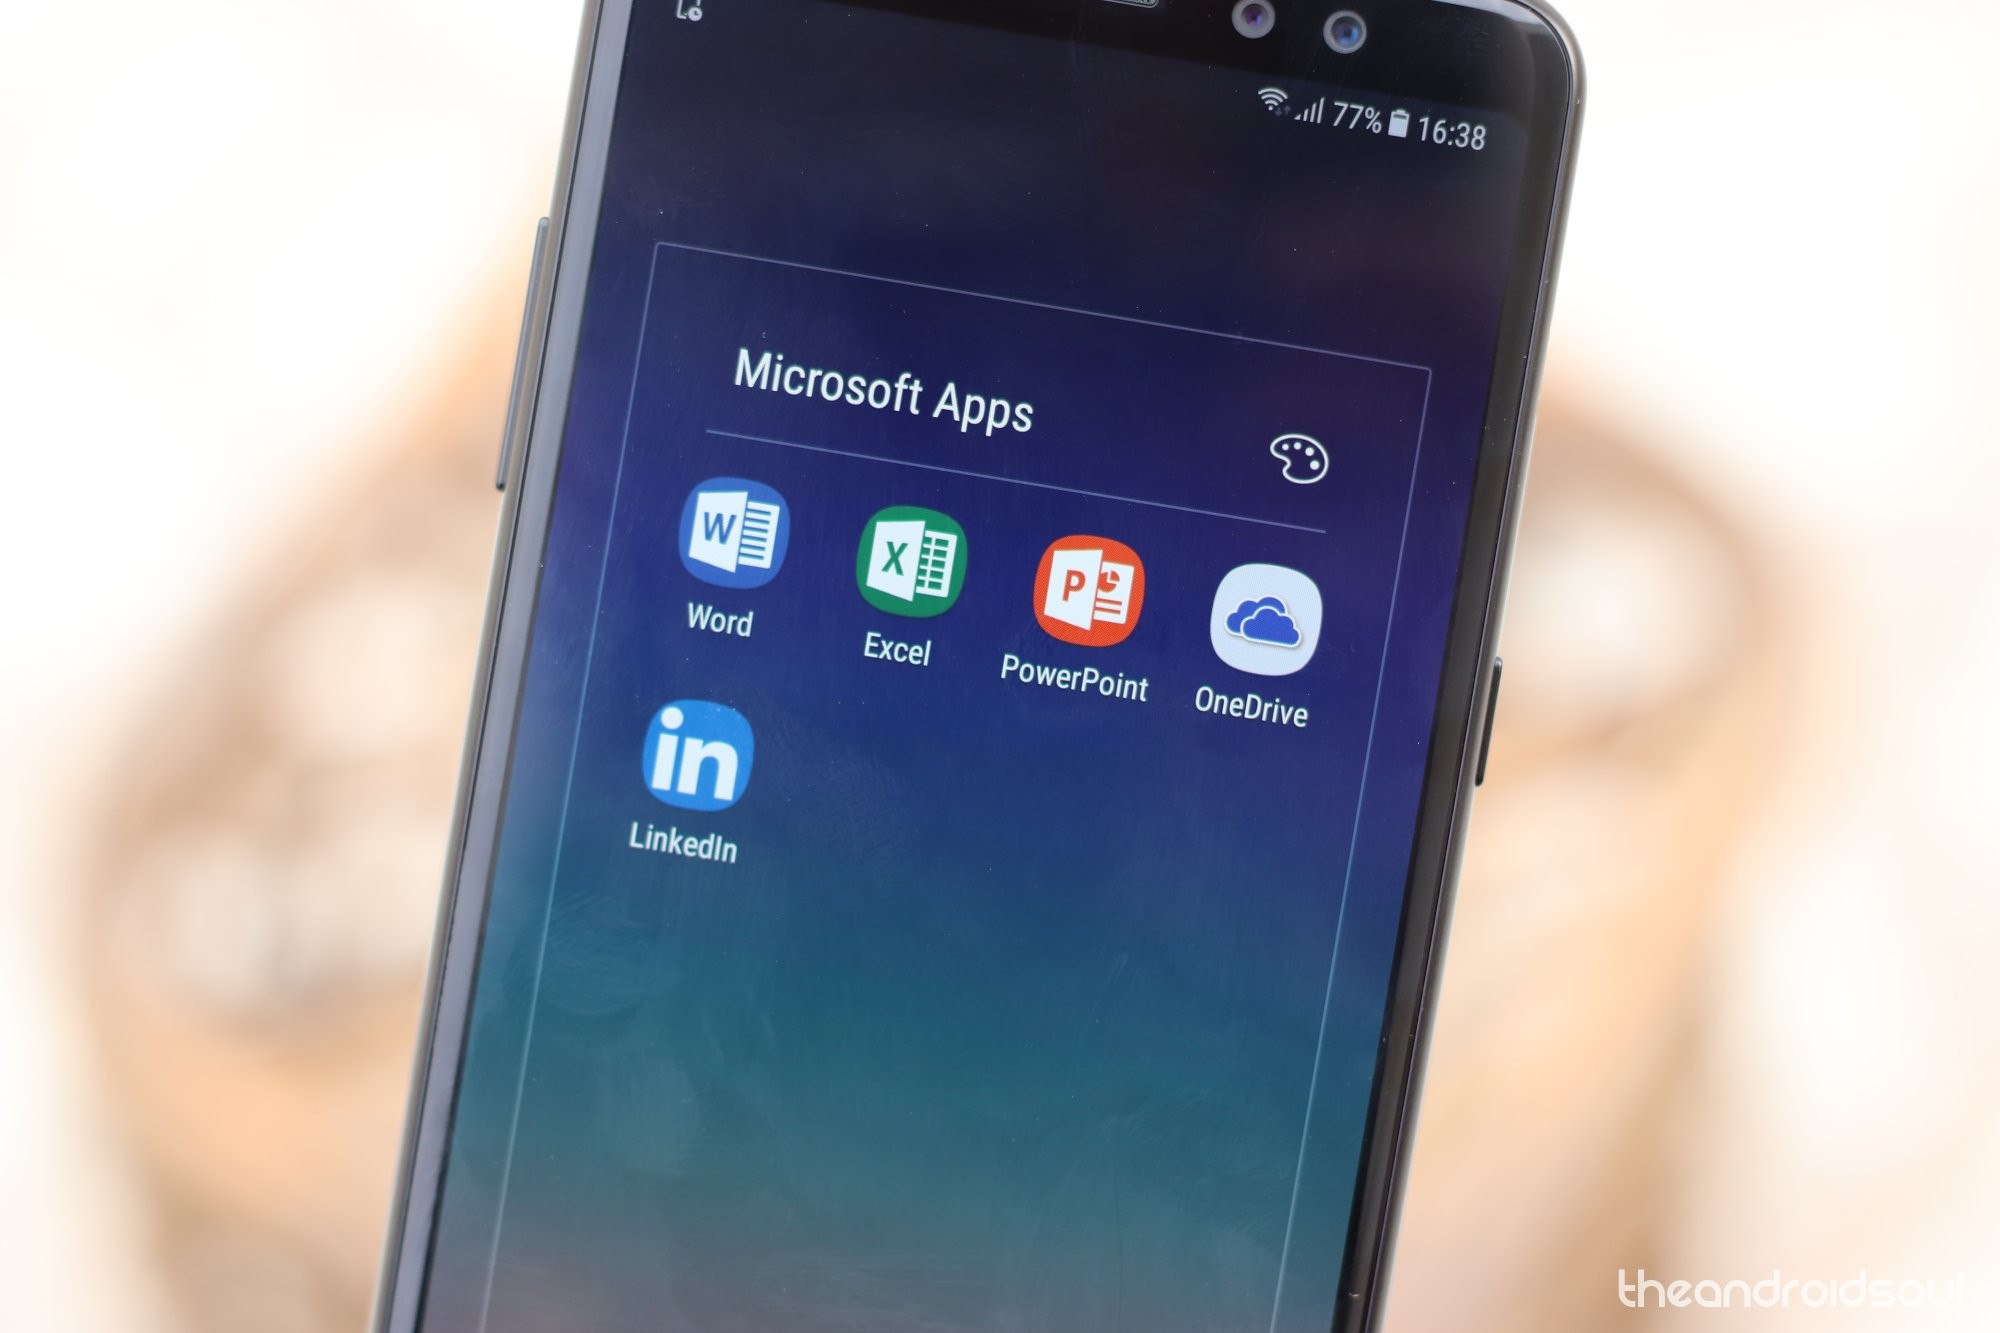 Galaxy A8 plus 2018 preinstalled apps